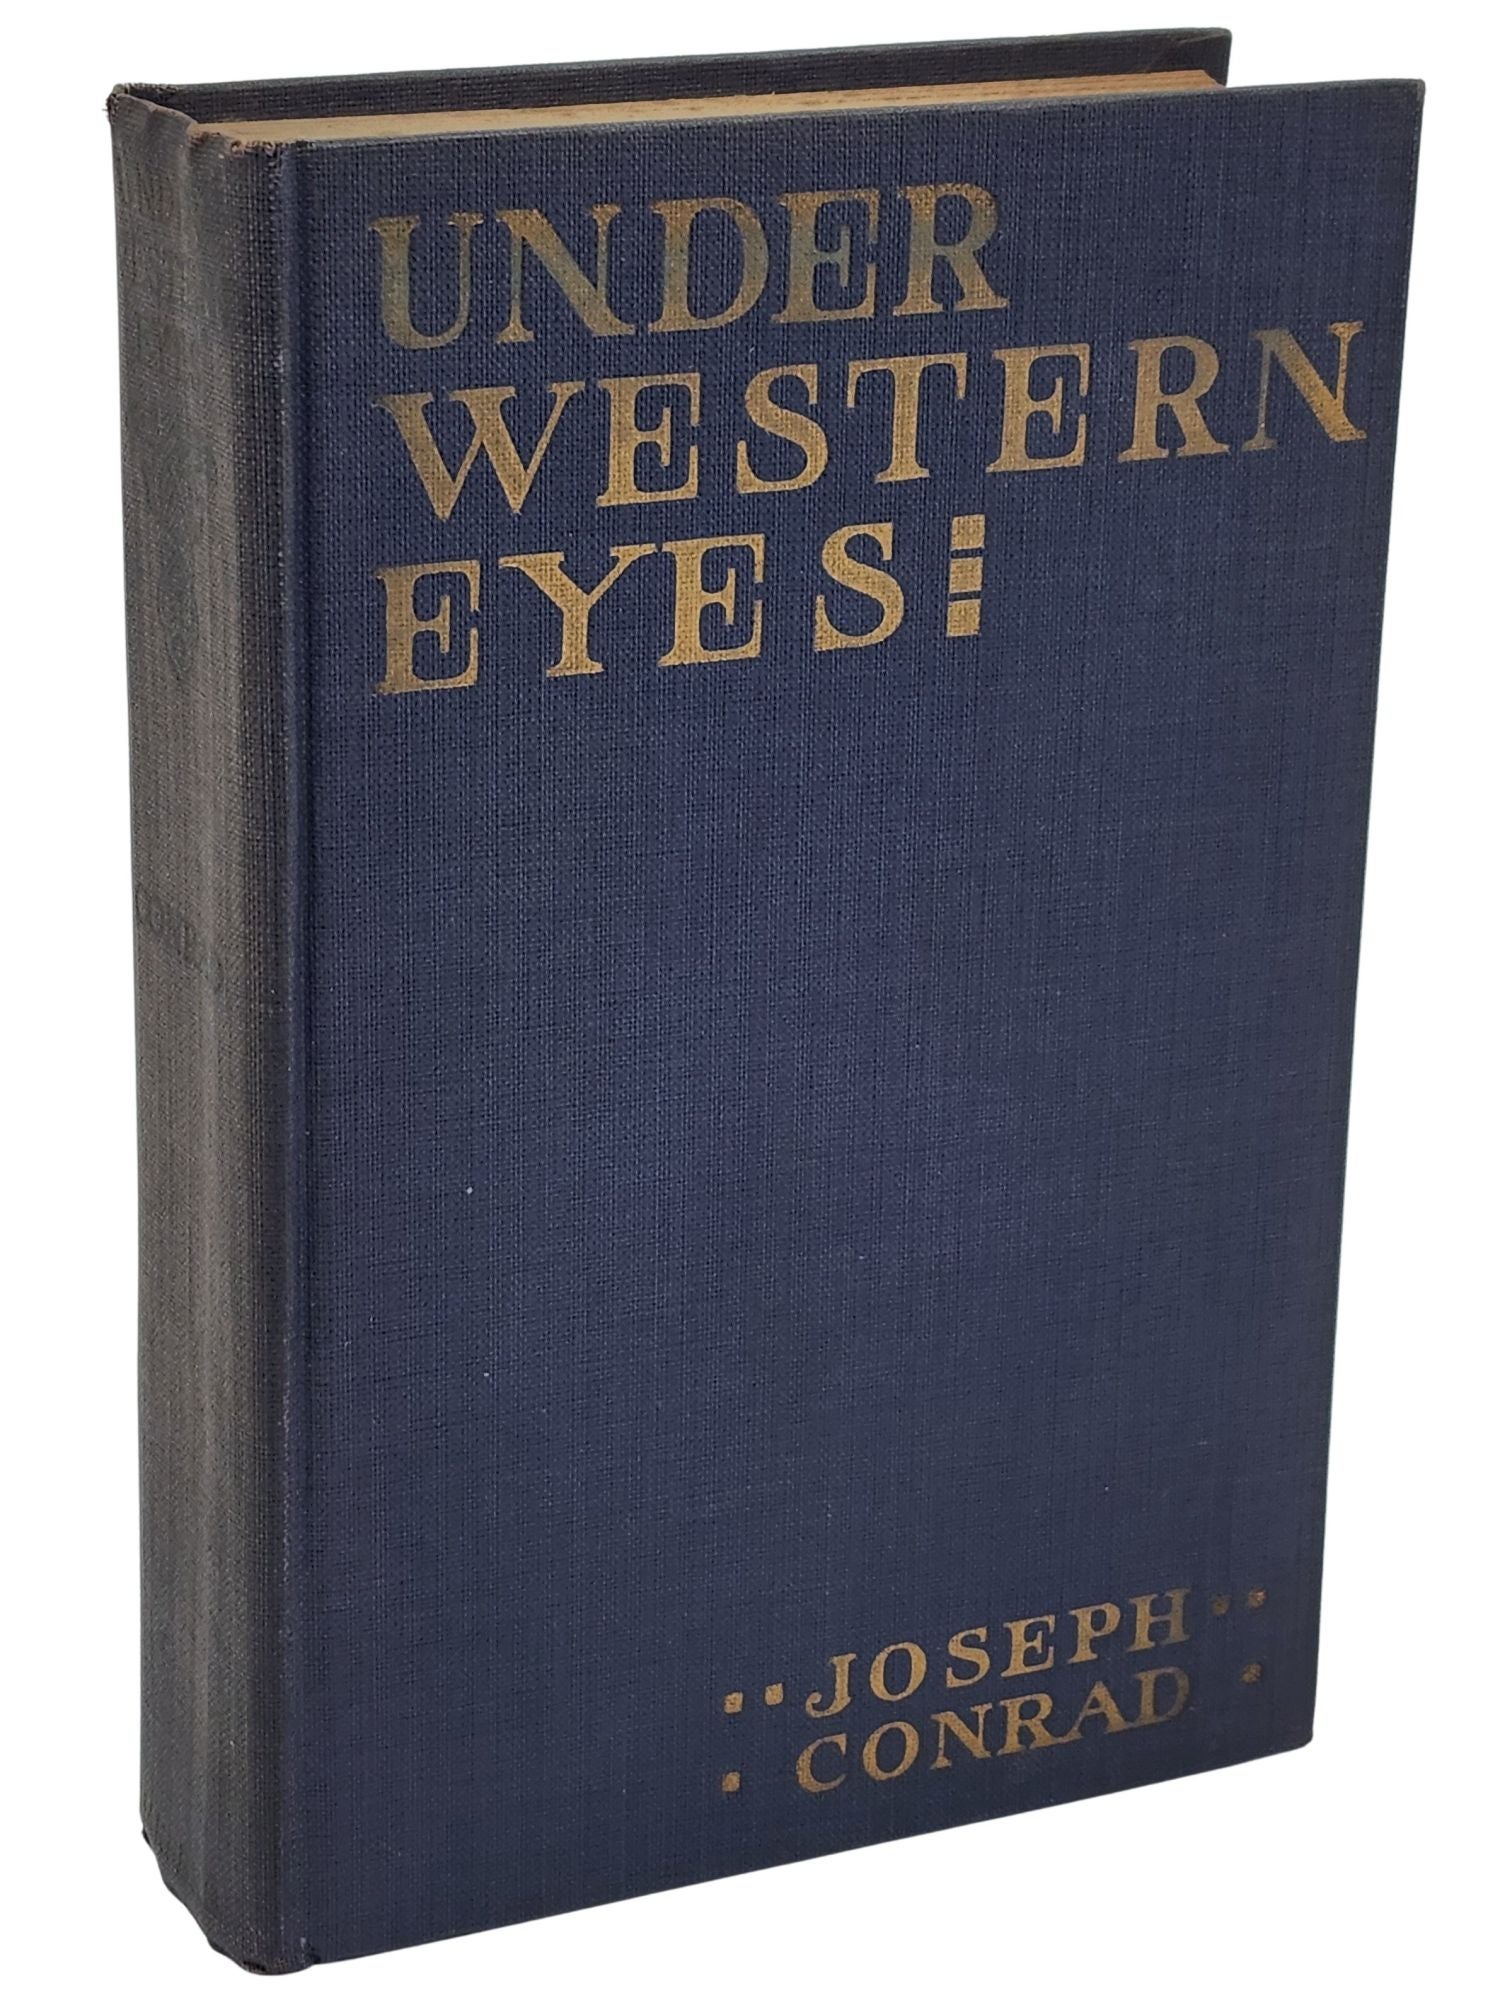 [Book #50767] UNDER WESTERN EYES. Joseph Conrad.